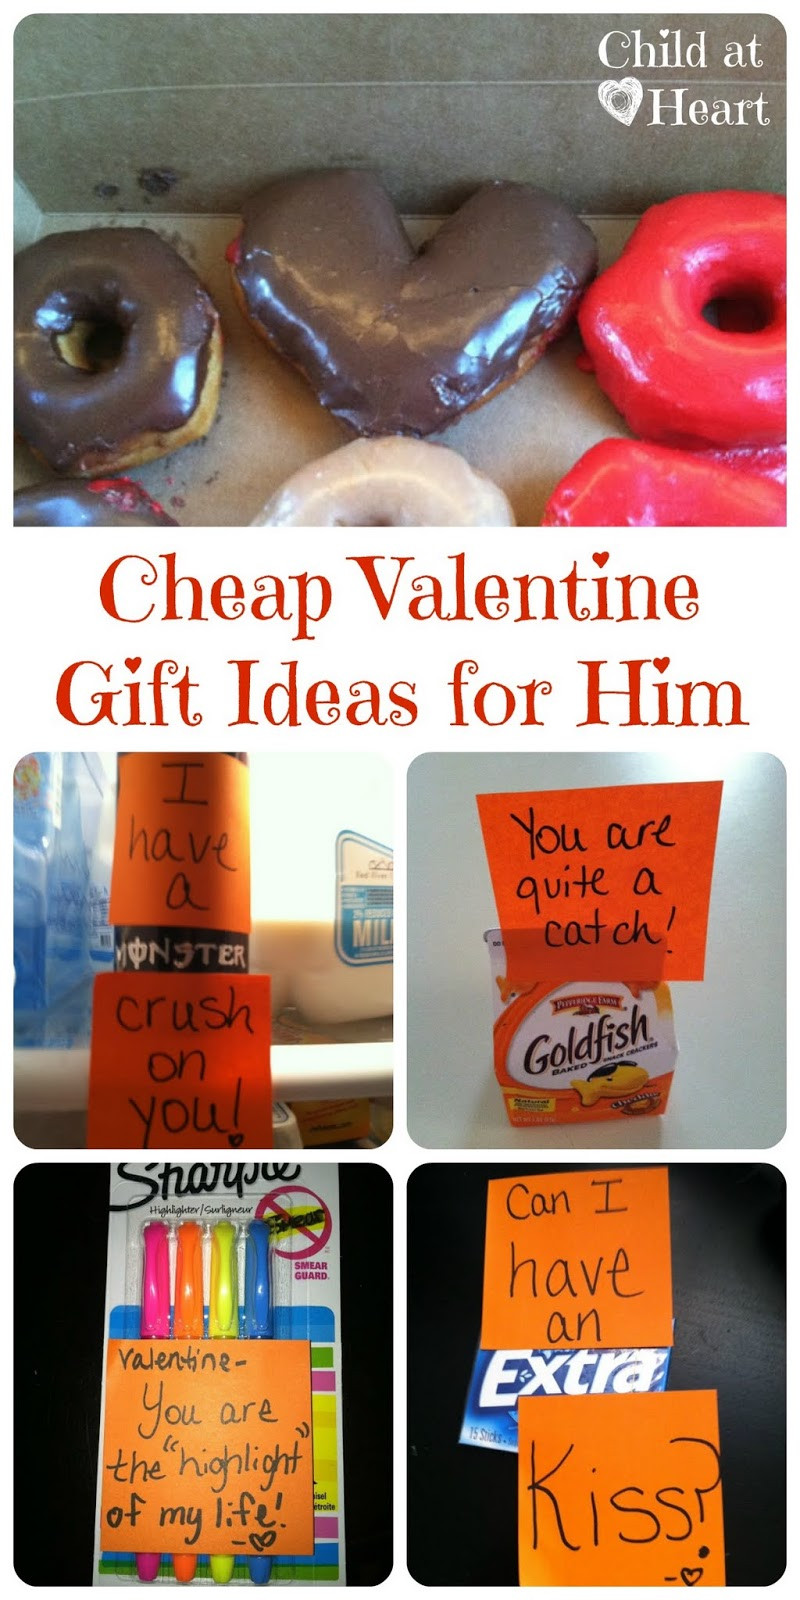 Valentine Gift Ideas For Him Pinterest
 Cheap Valentine Gift Ideas for Him Child at Heart Blog